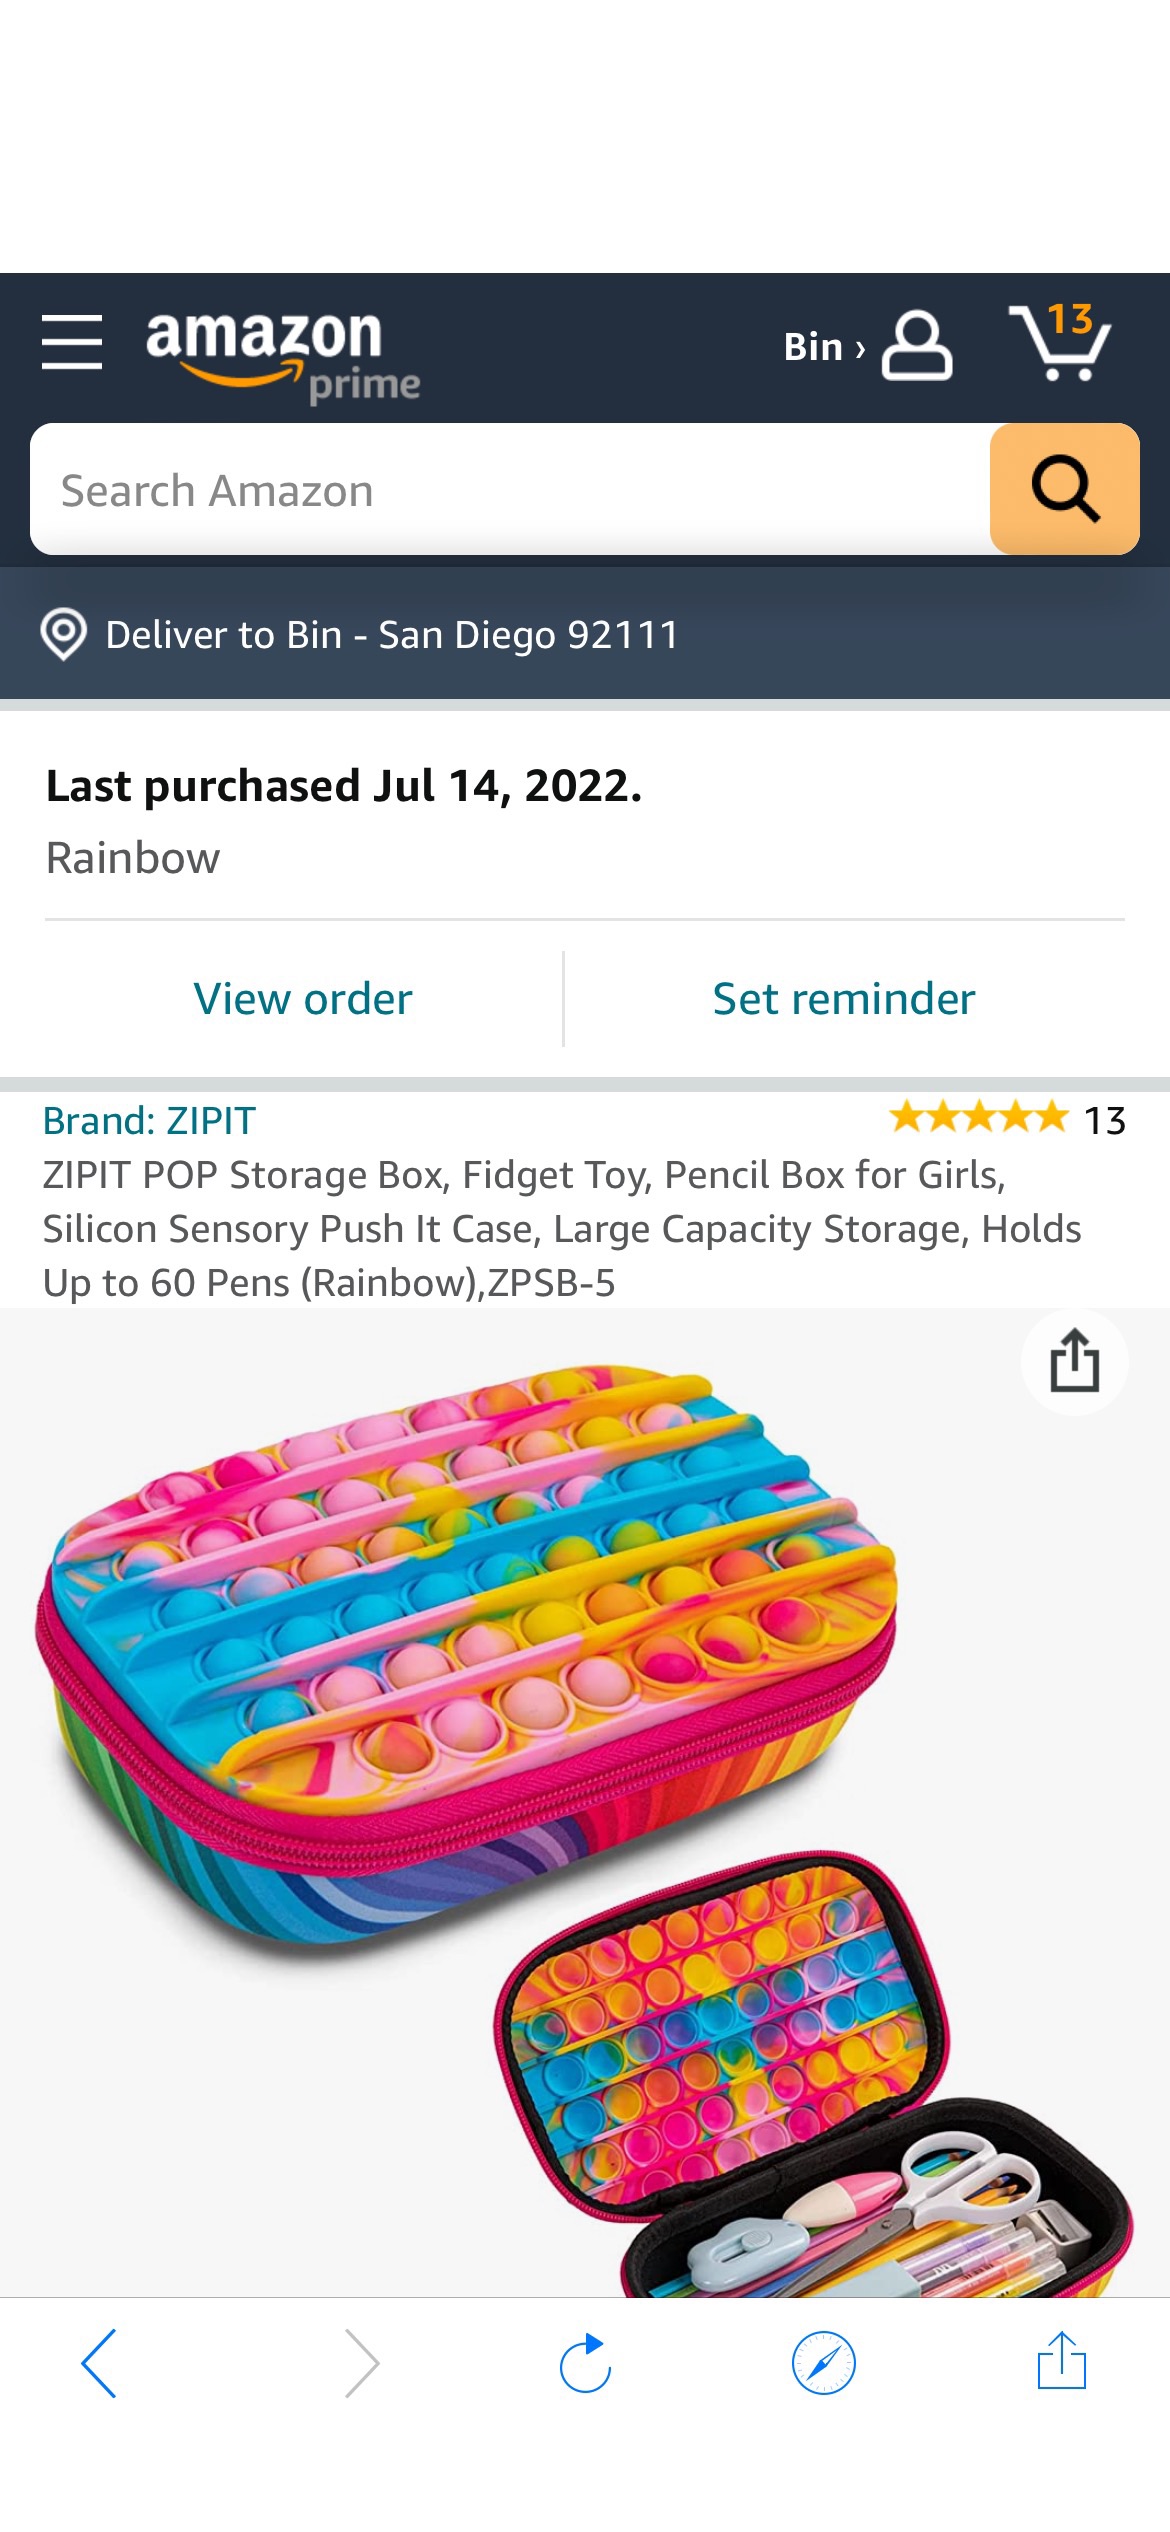 Amazon.com : ZIPIT POP Storage Box, Fidget Toy, Pencil Box for Girls, Silicon Sensory Push It Case, Large Capacity Storage, Holds Up to 60 Pens (Rainbow),ZPSB-5 : Office Products笔袋